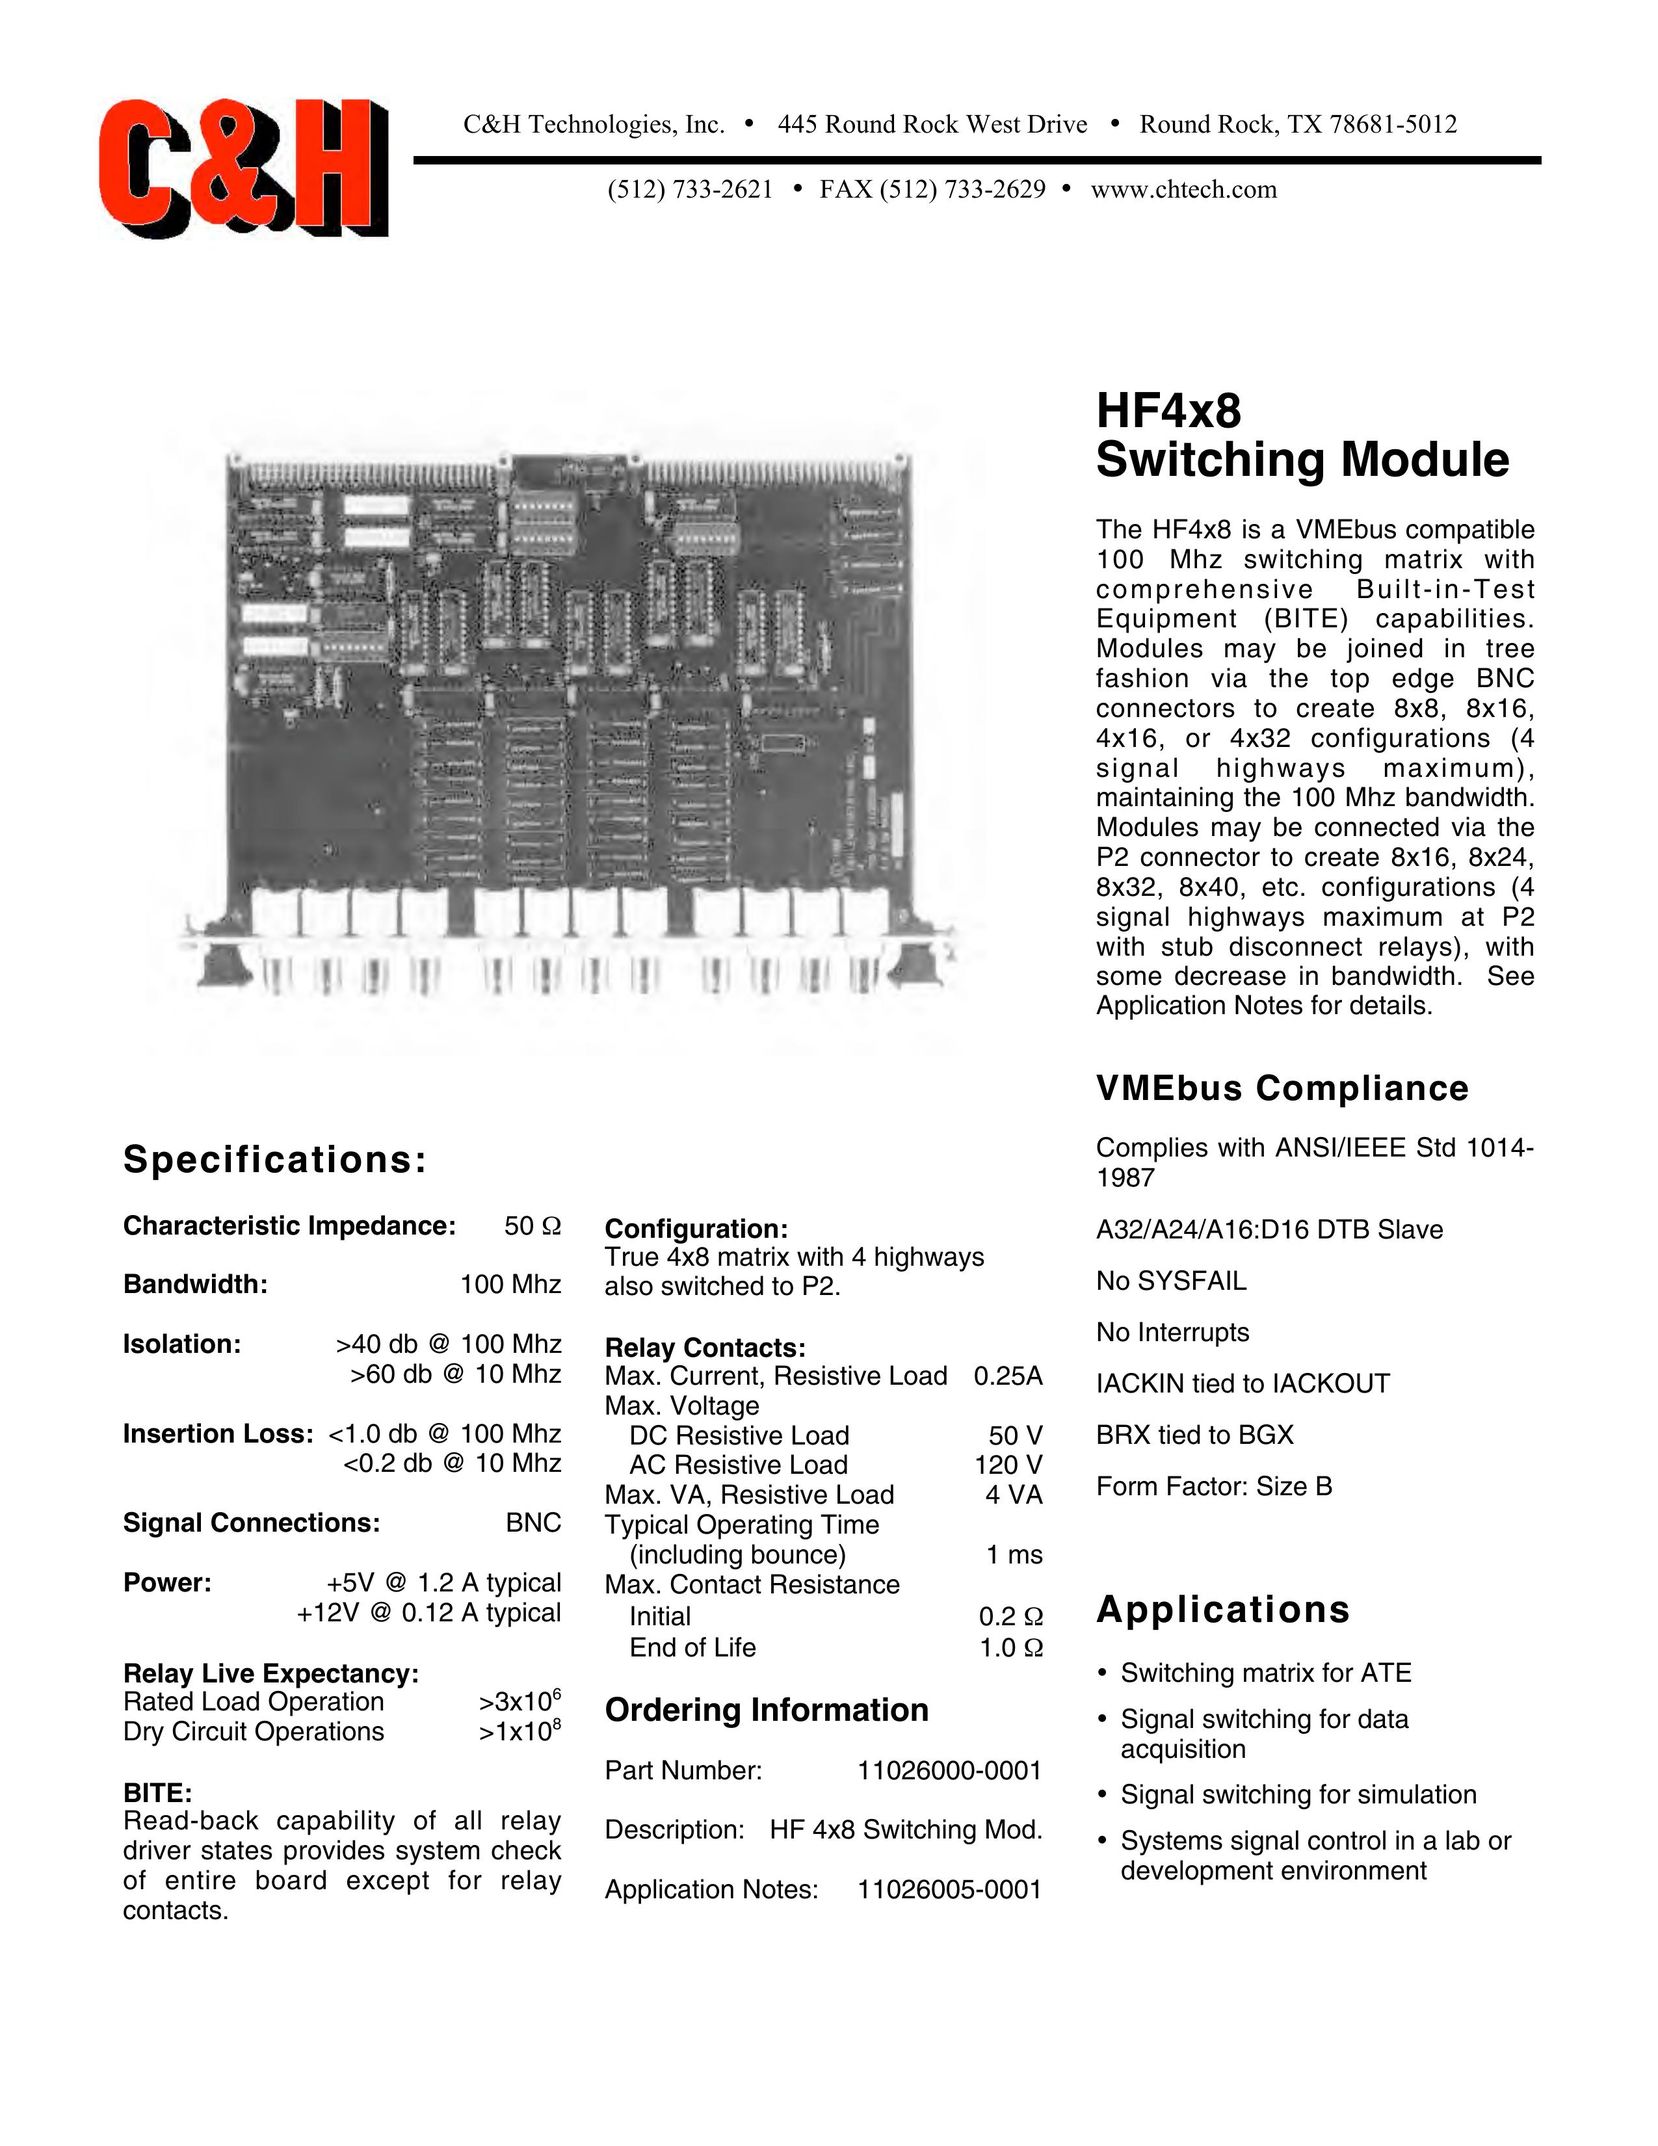 CH Tech HF4x8 Switch User Manual